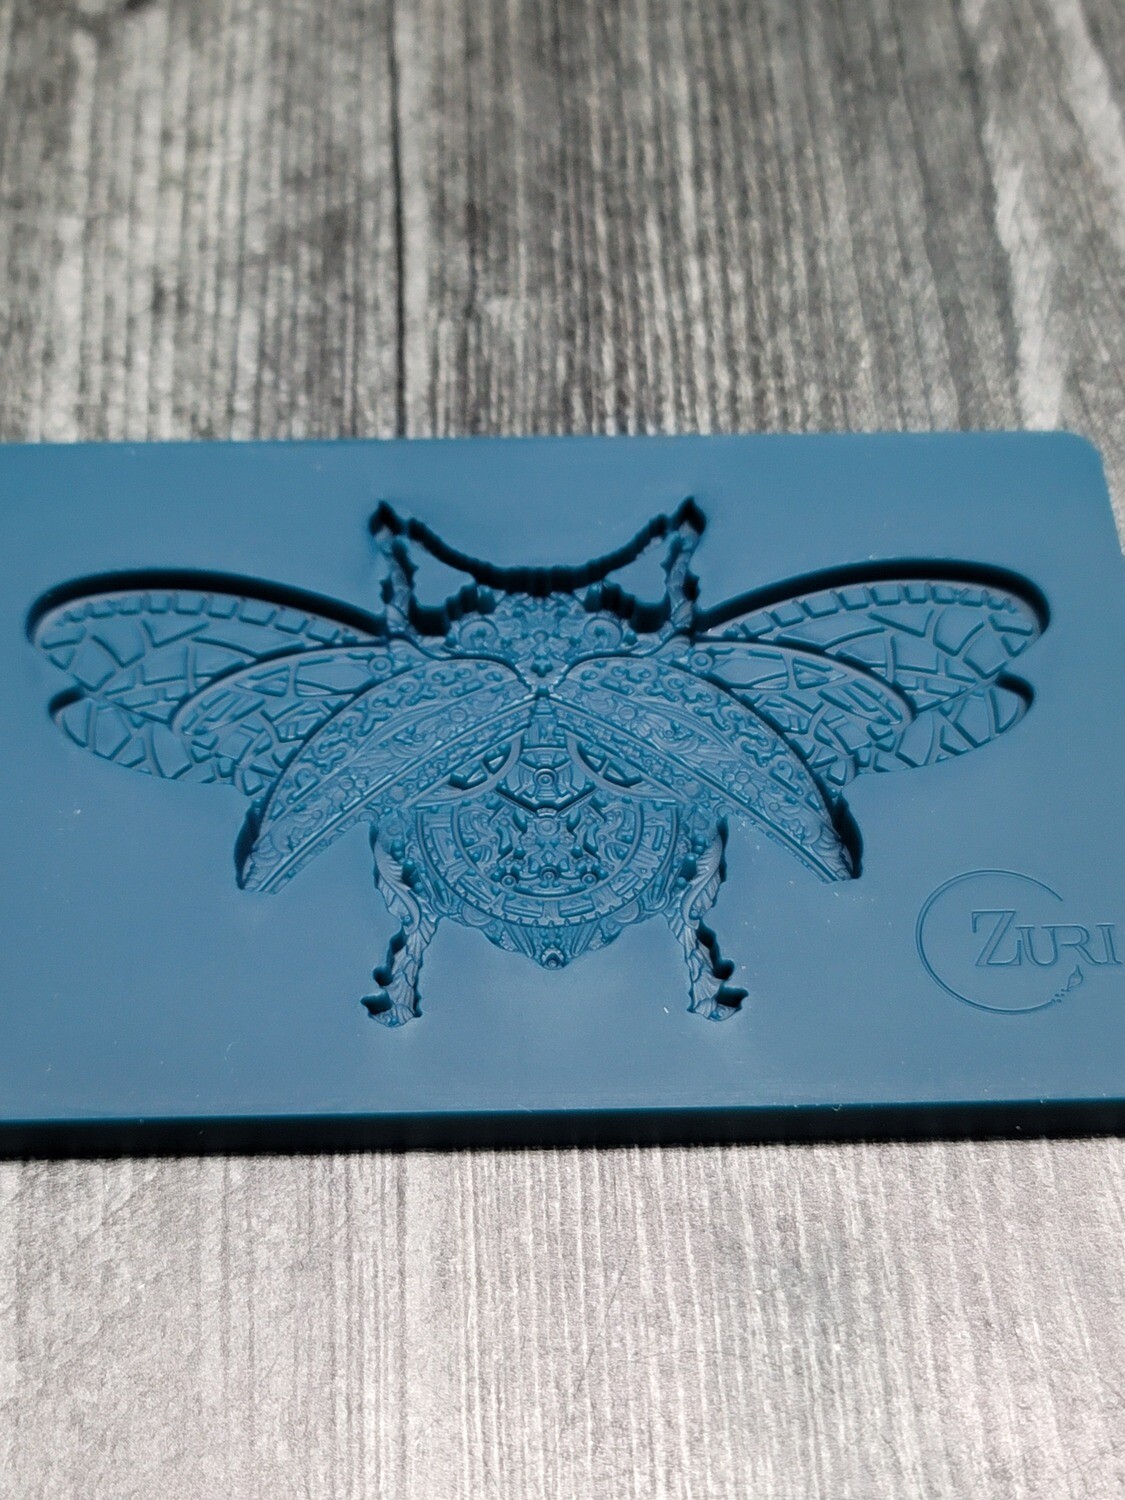 Steampunk Beetle 2 - Zuri-Inc